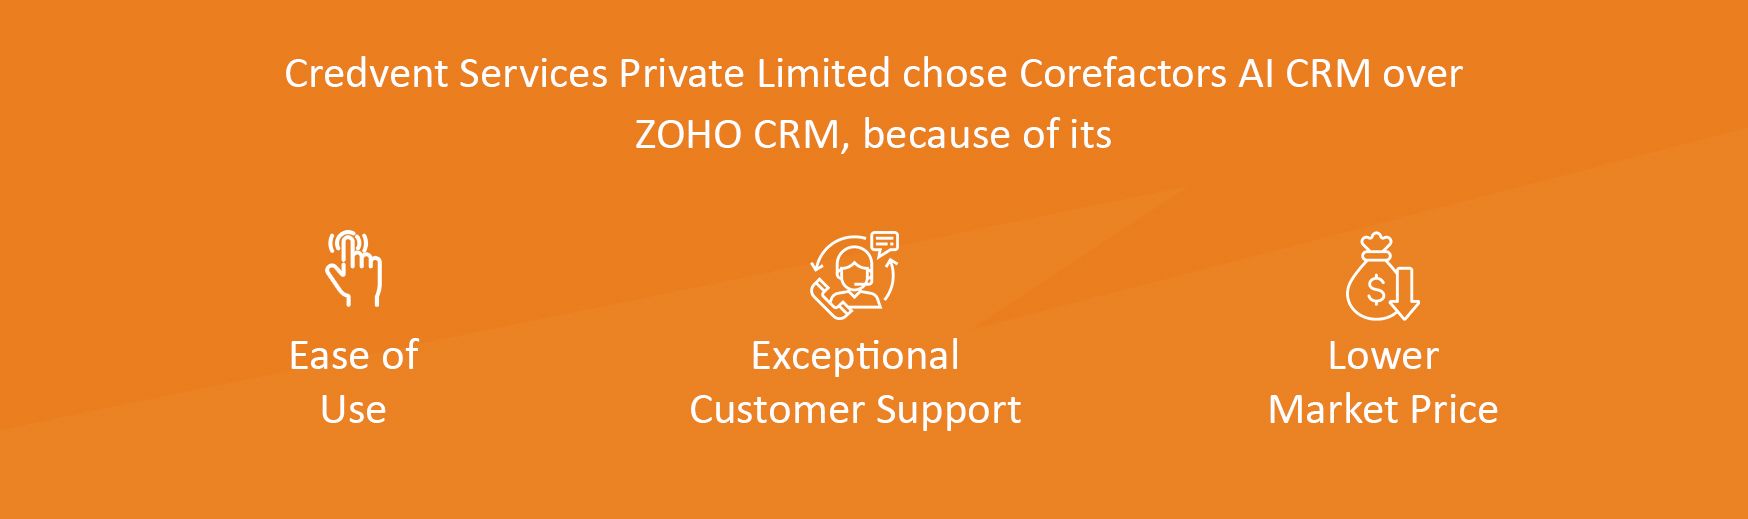 Why Credvent Service Private Limited chose Corefactors AI CRM?